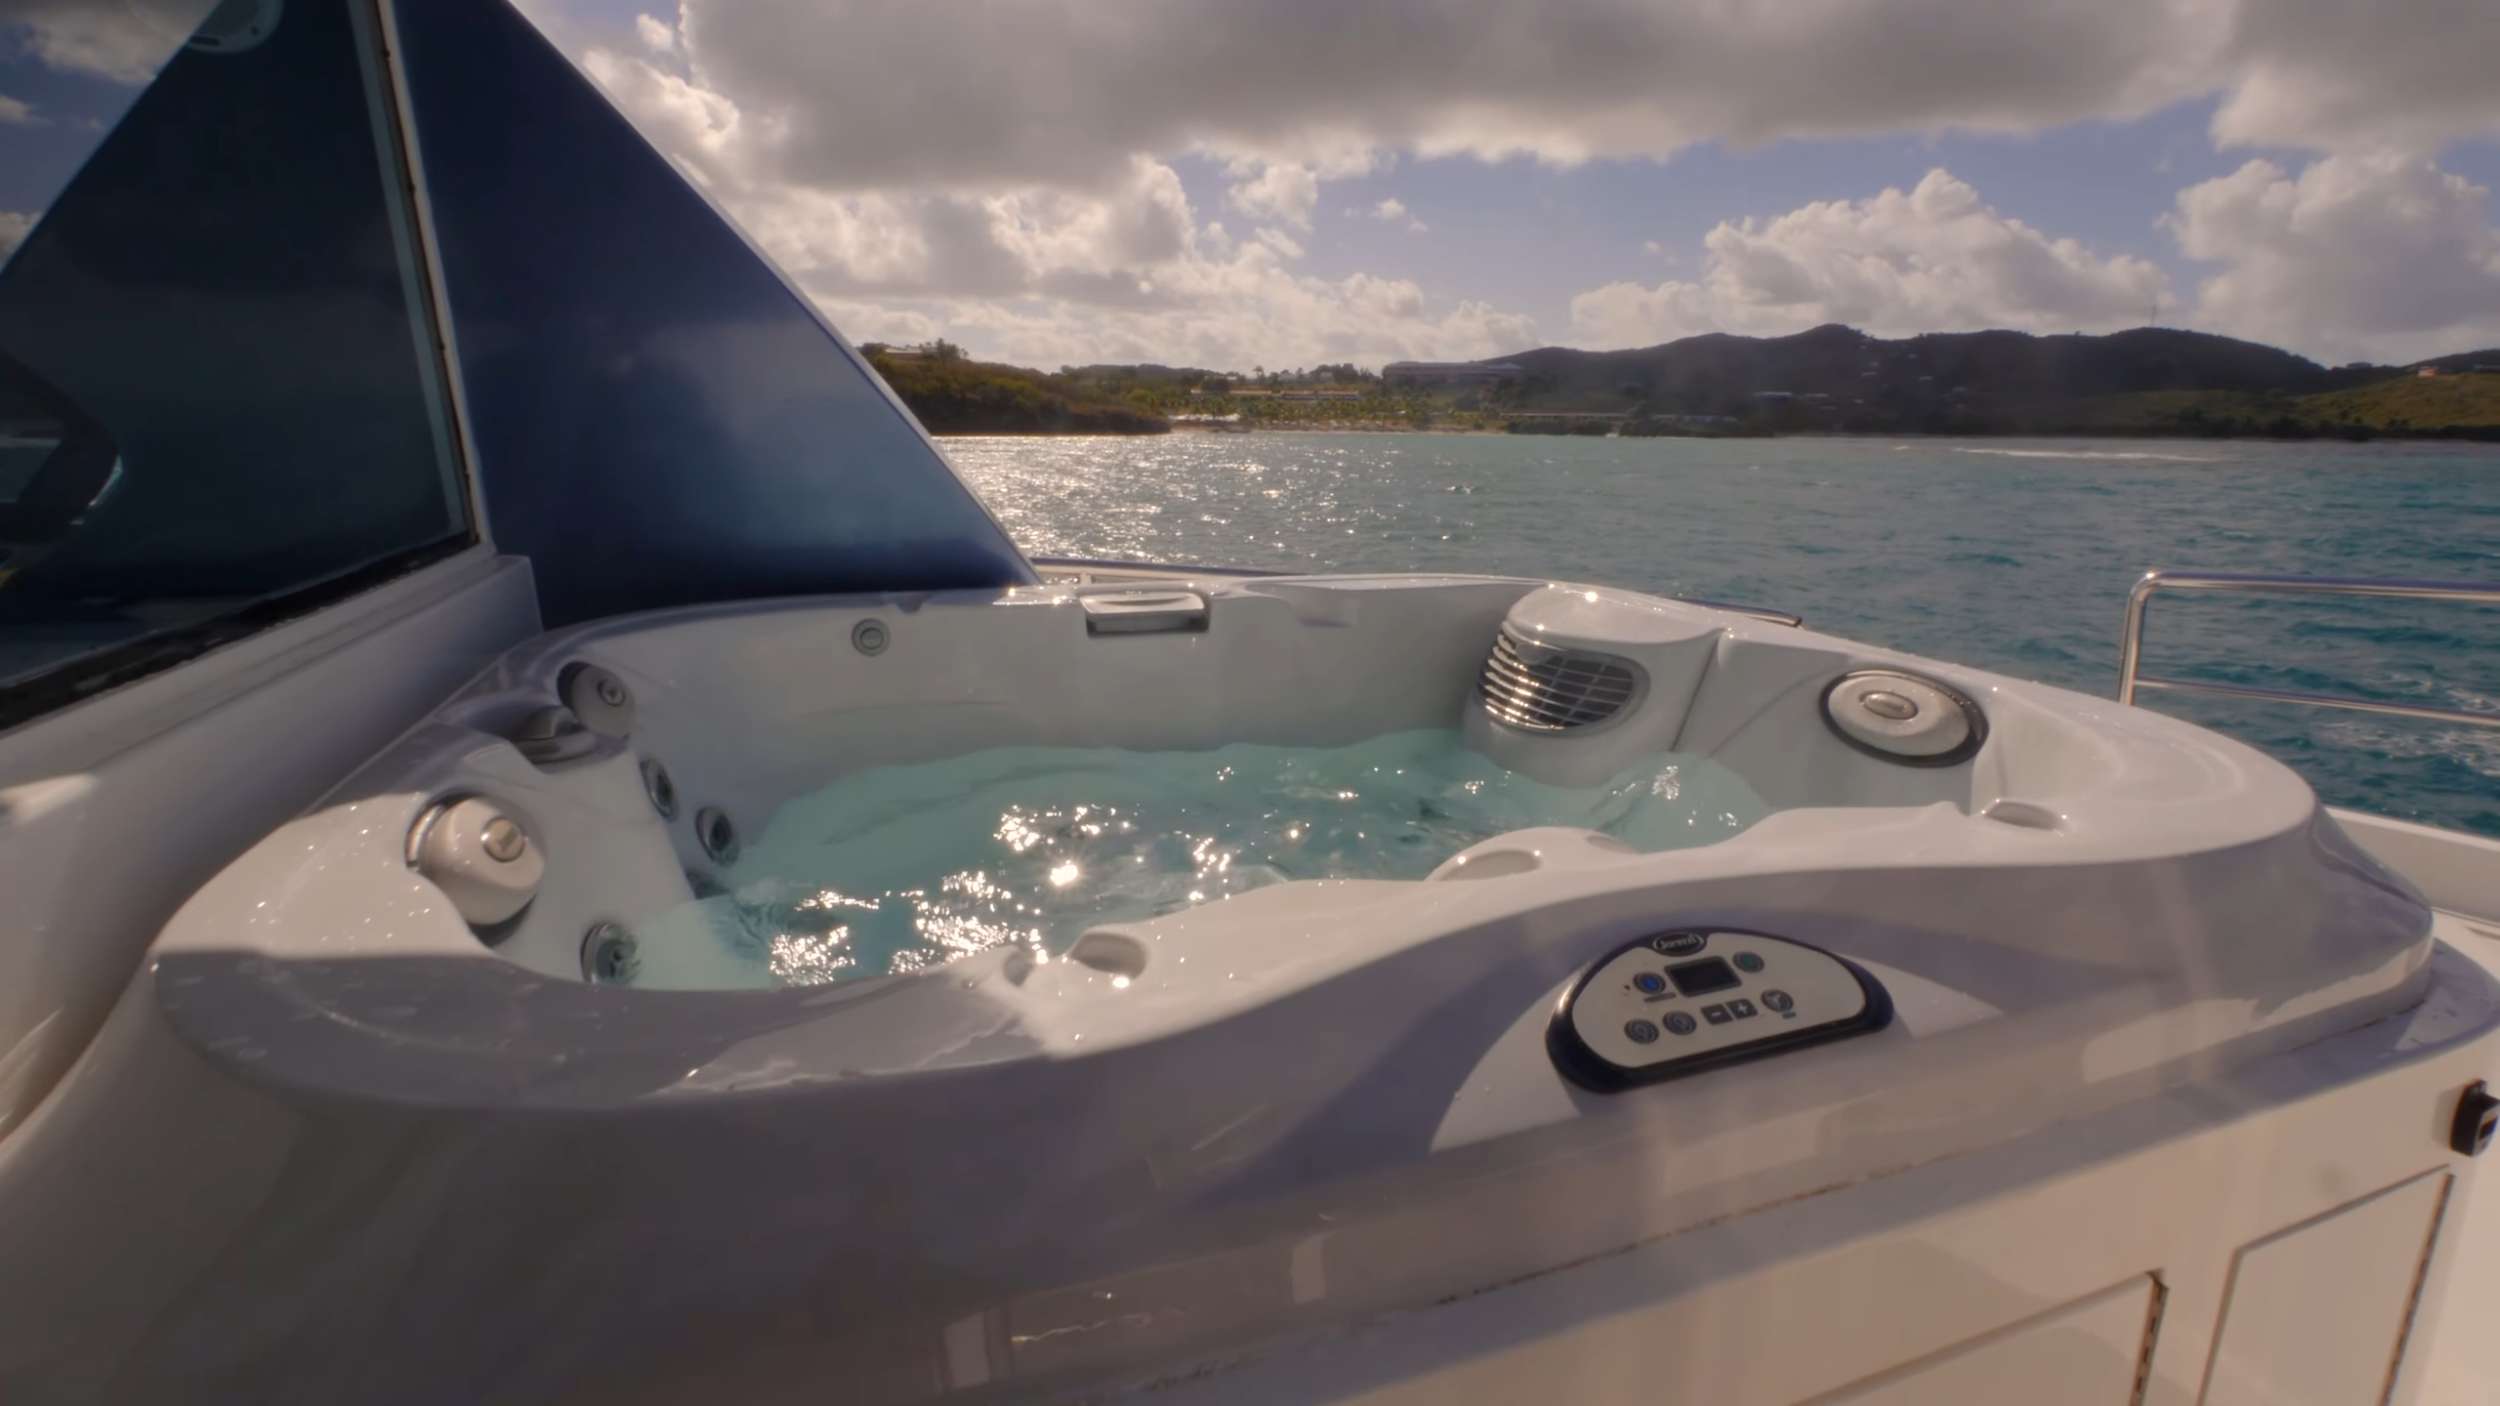 QARA - Superyacht charter British Virgin Island & Boat hire in Caribbean Virgin Islands 5